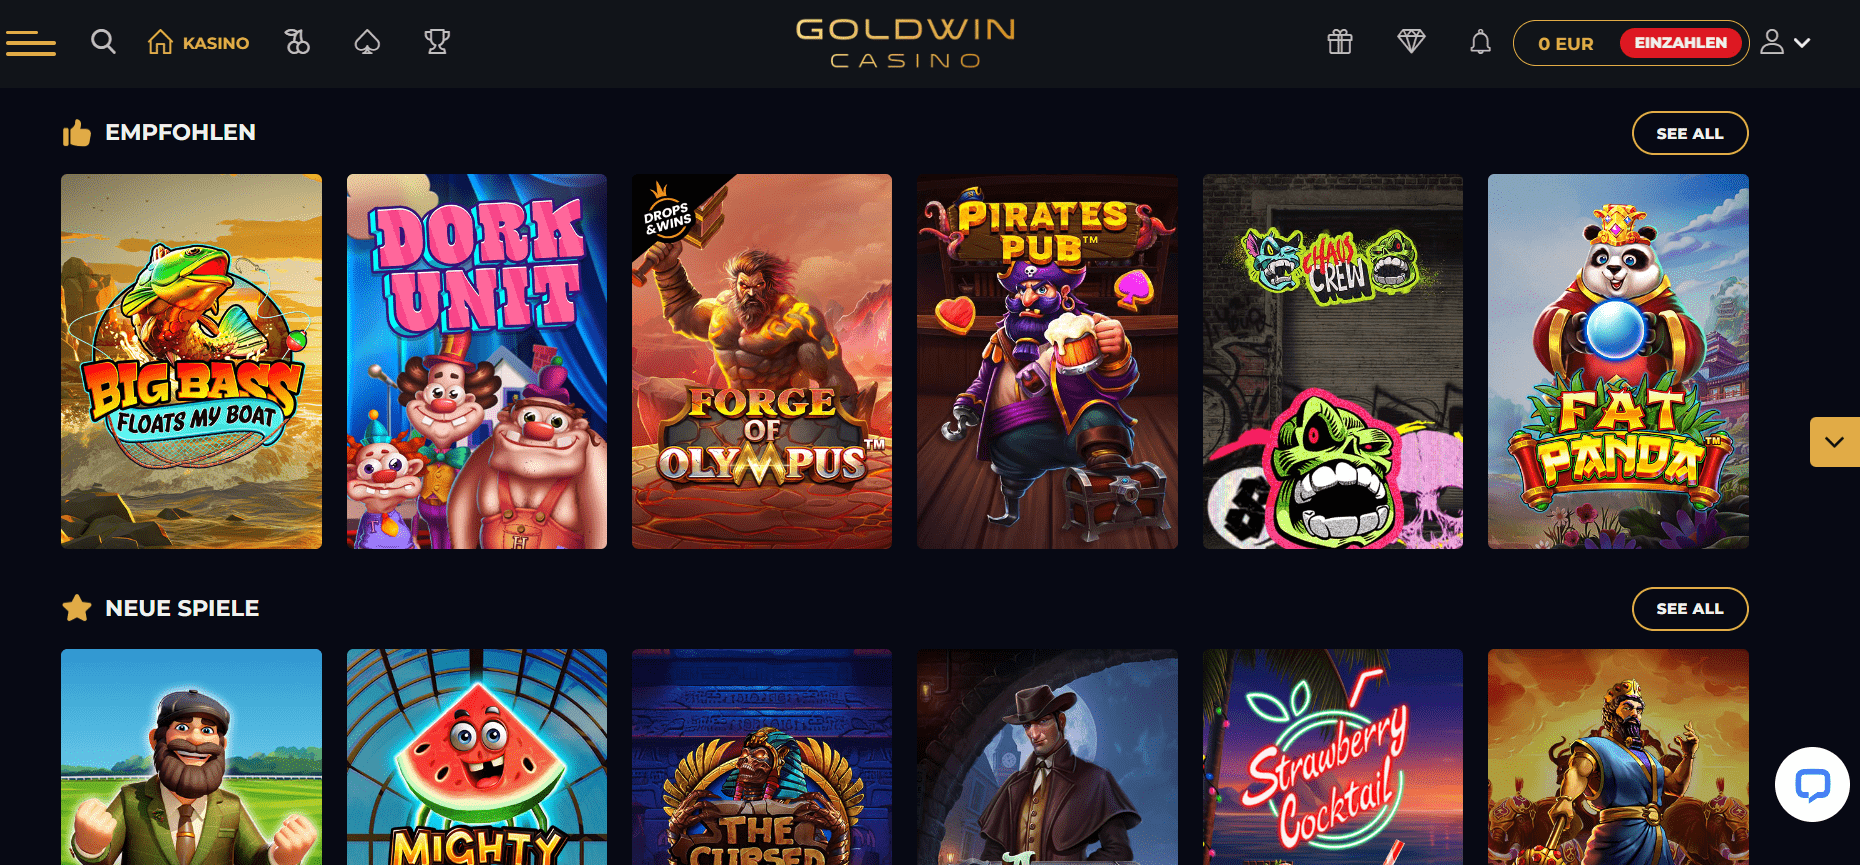 GoldWin Games